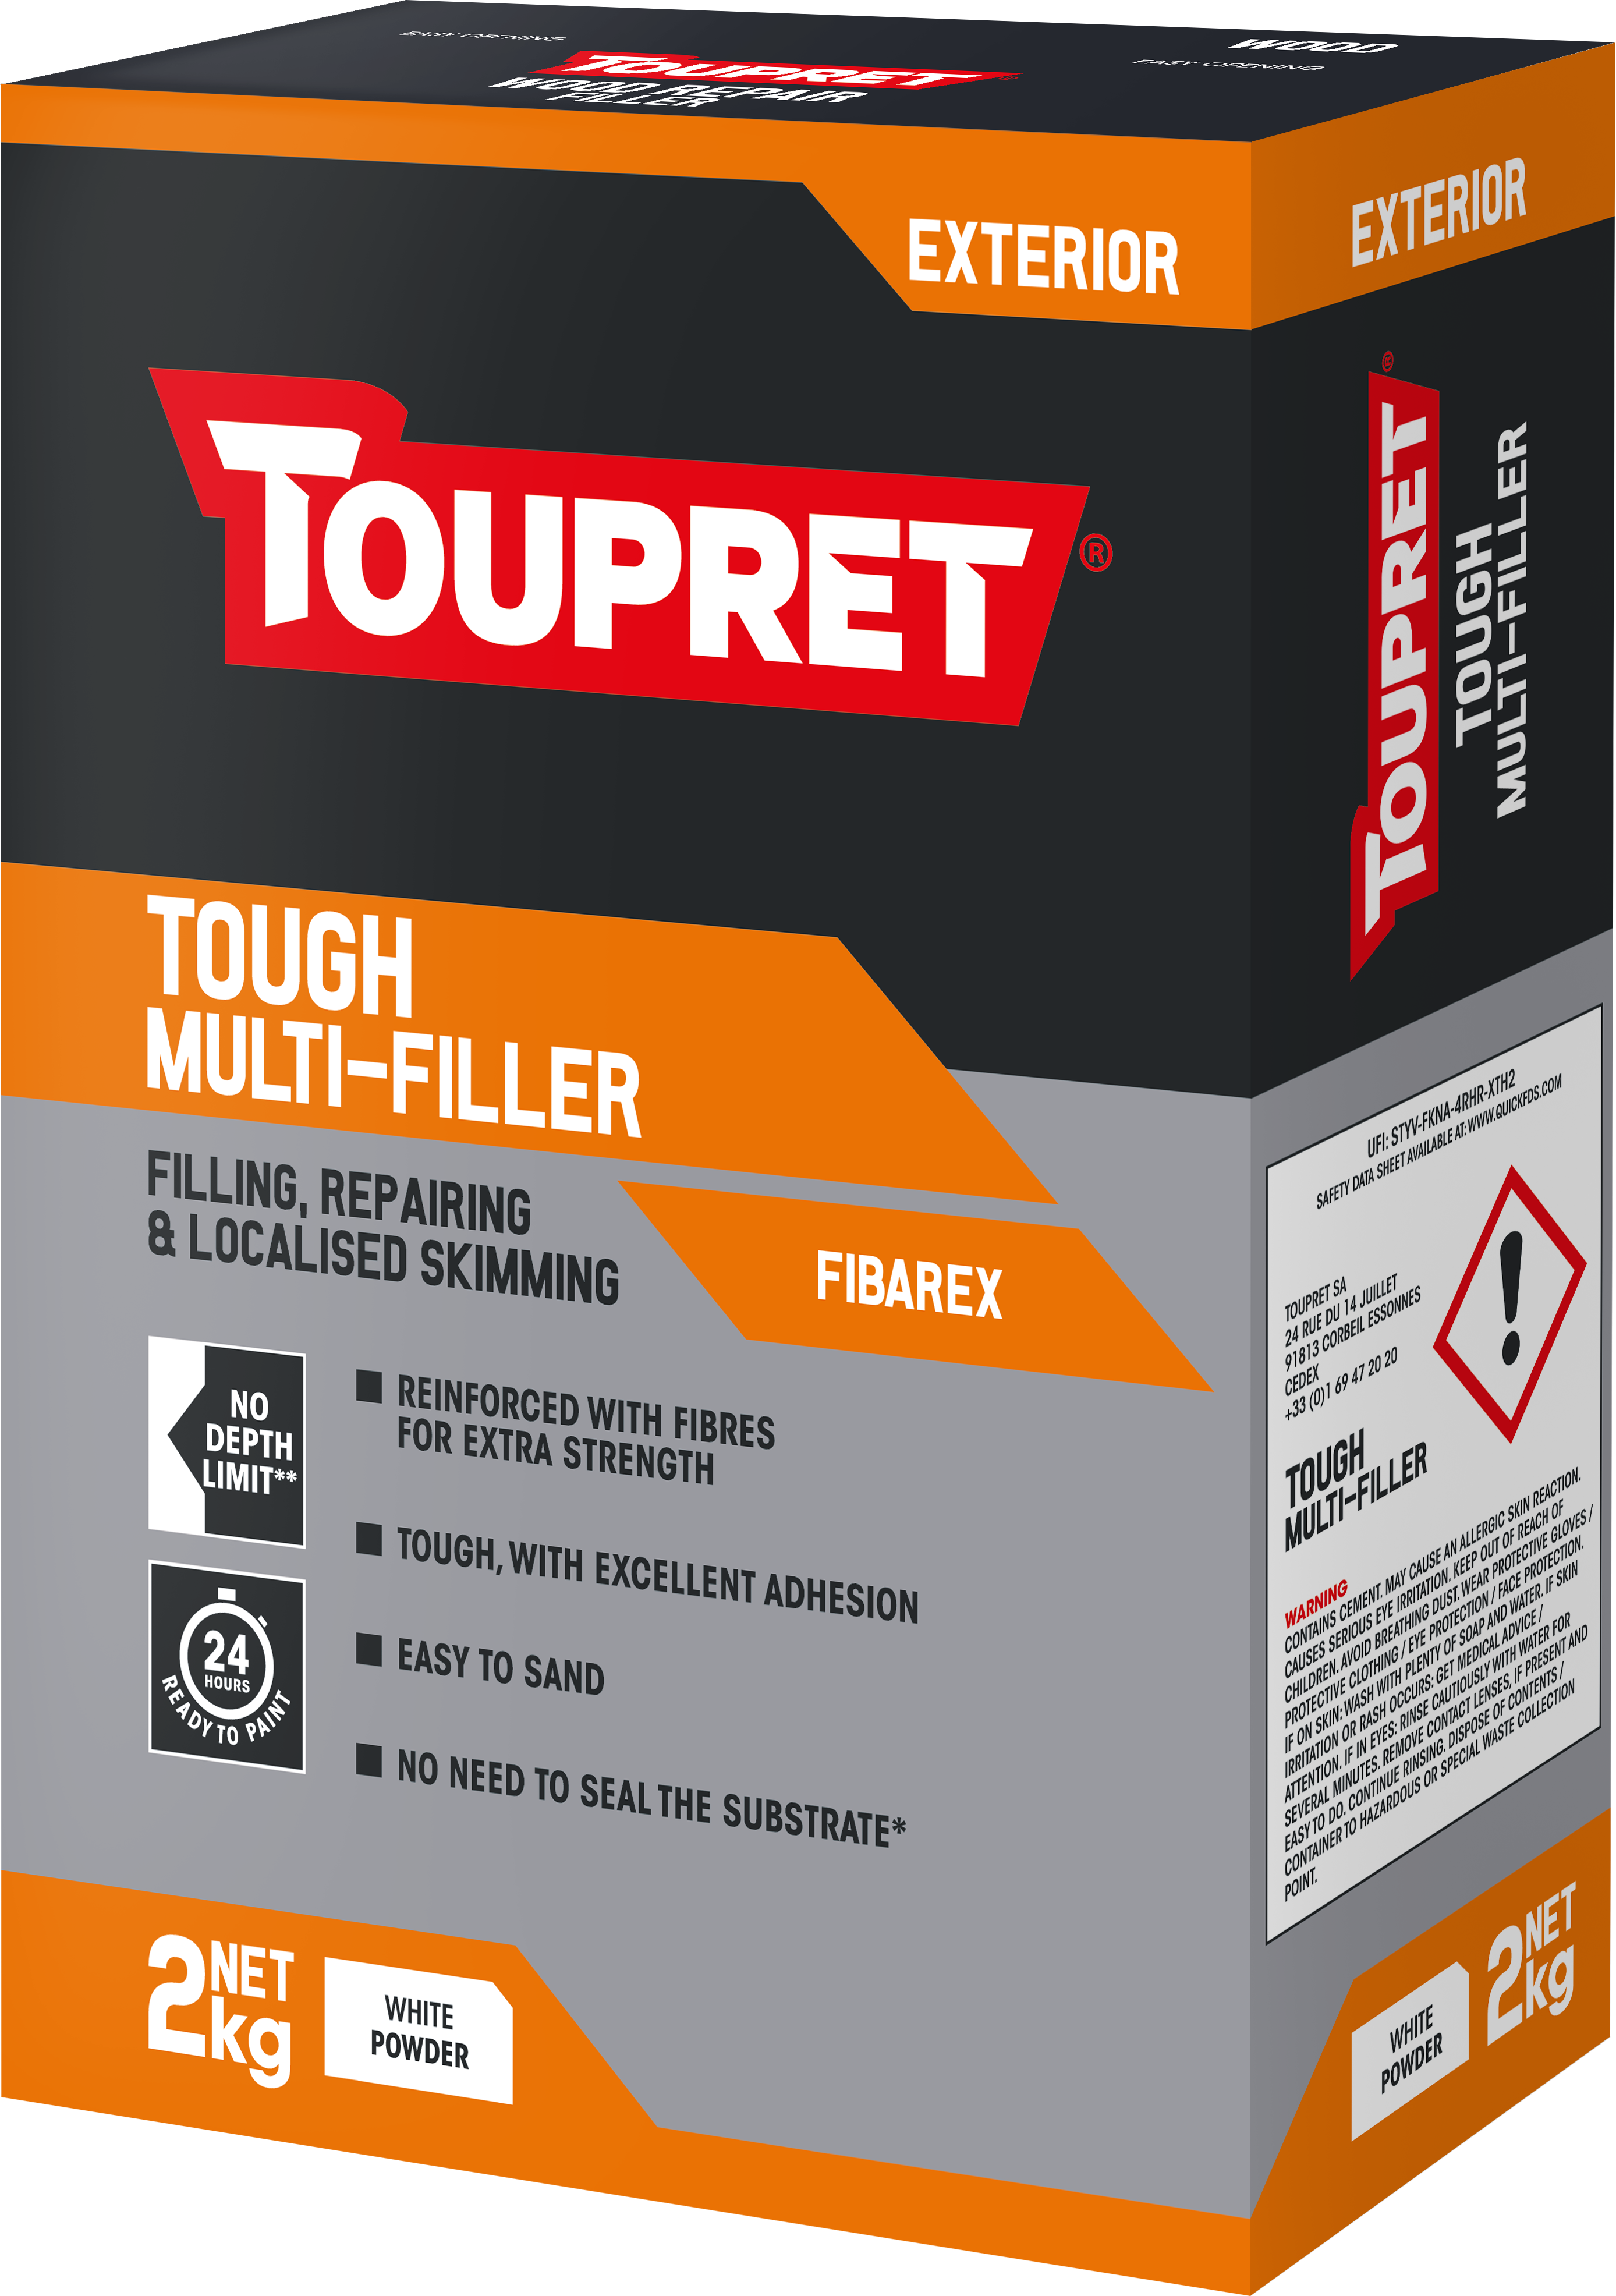 Toupret Tough Multi-Filler (Fibarex) 2kg